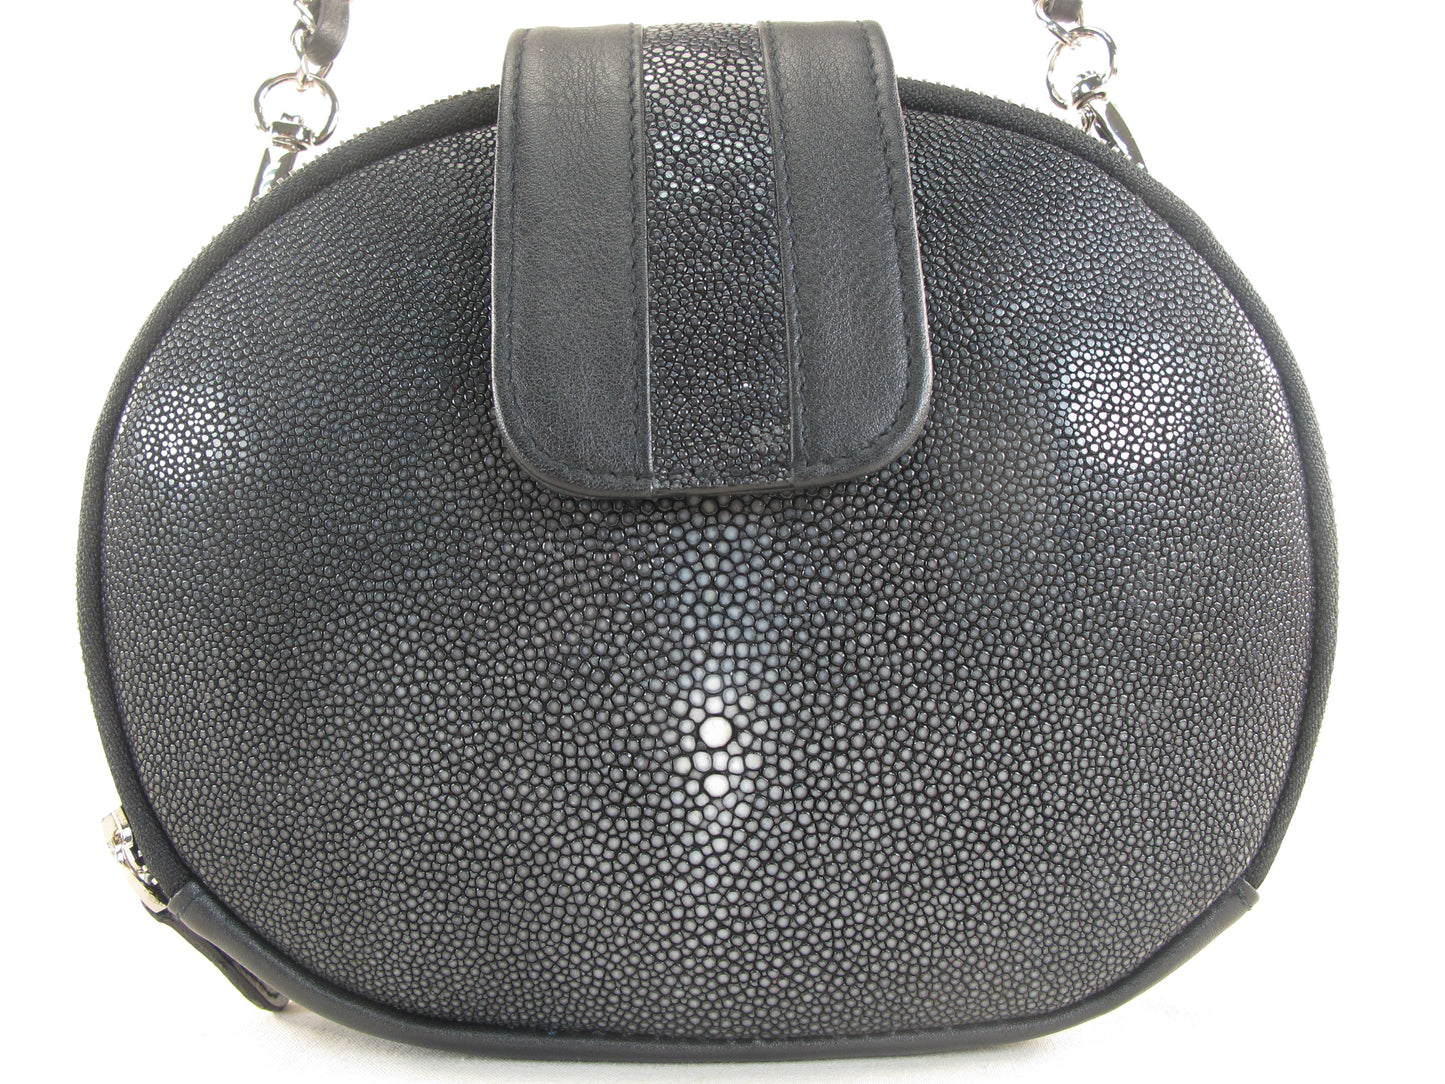 PELGIO Genuine Polished Stingray Skin Leather Women's Double Zip Shoulder Bag Purse